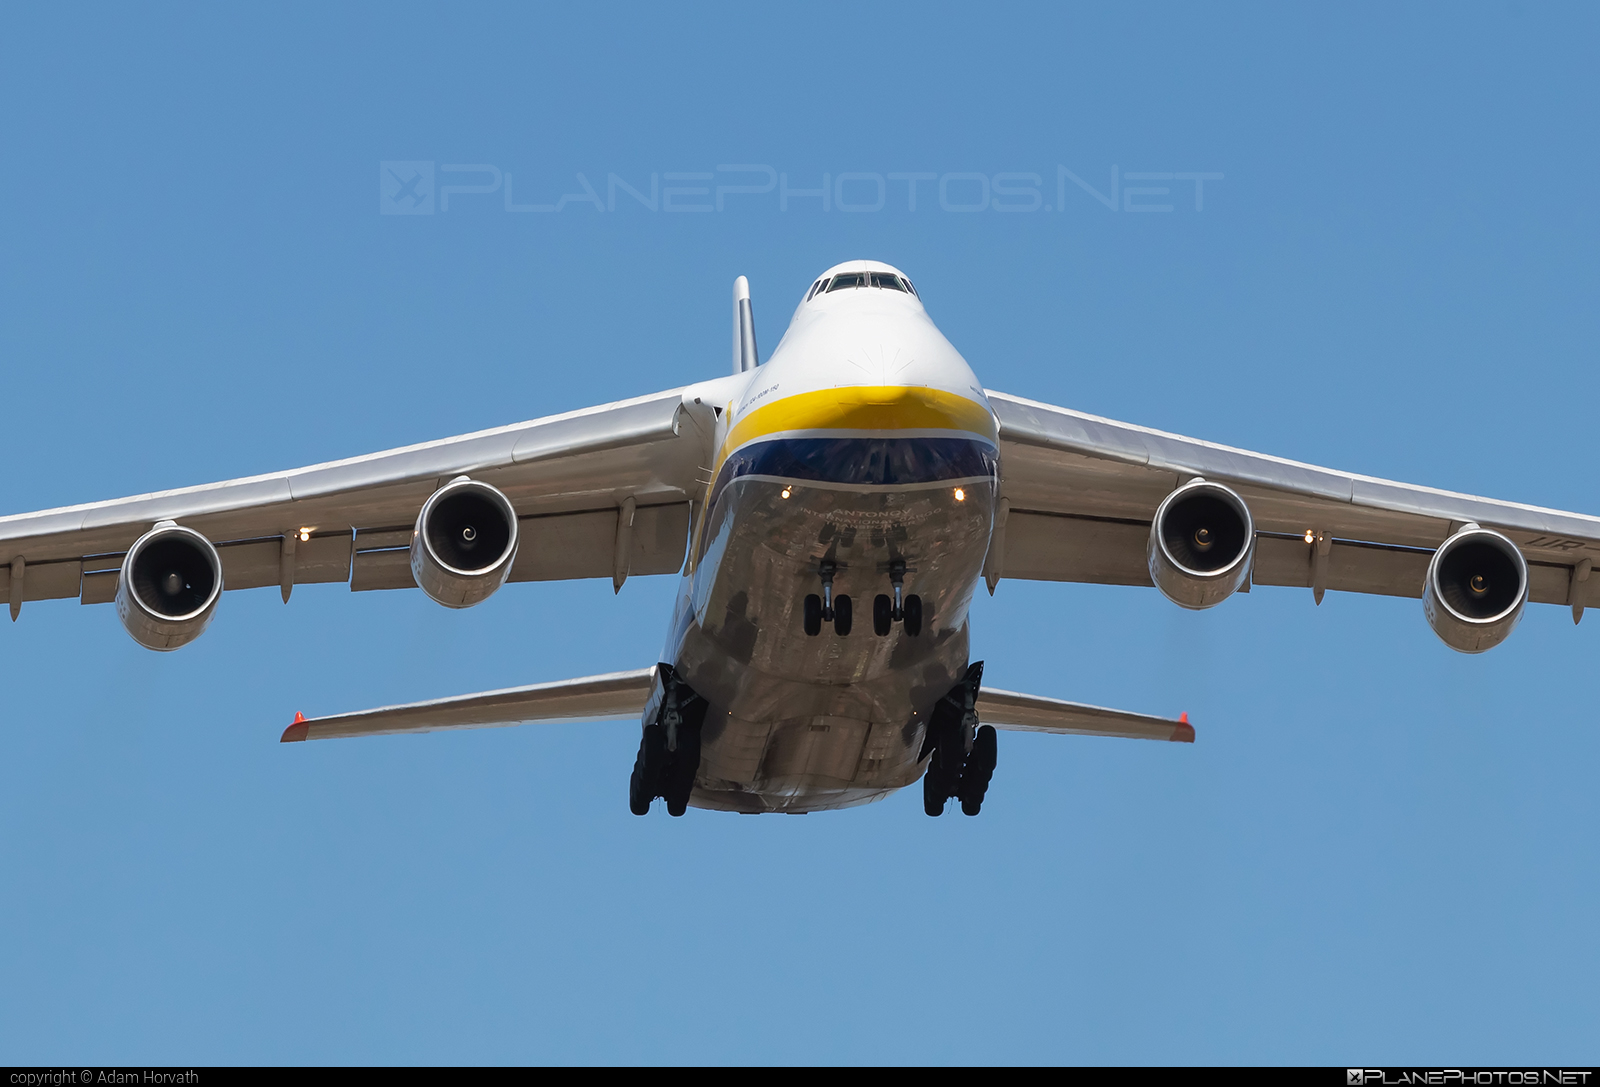 Antonov An-124-100M-150 Ruslan - UR-82009 operated by Antonov Airlines #AntonovAirlines #an124 #an124100m150 #antonov #antonov124 #ruslan